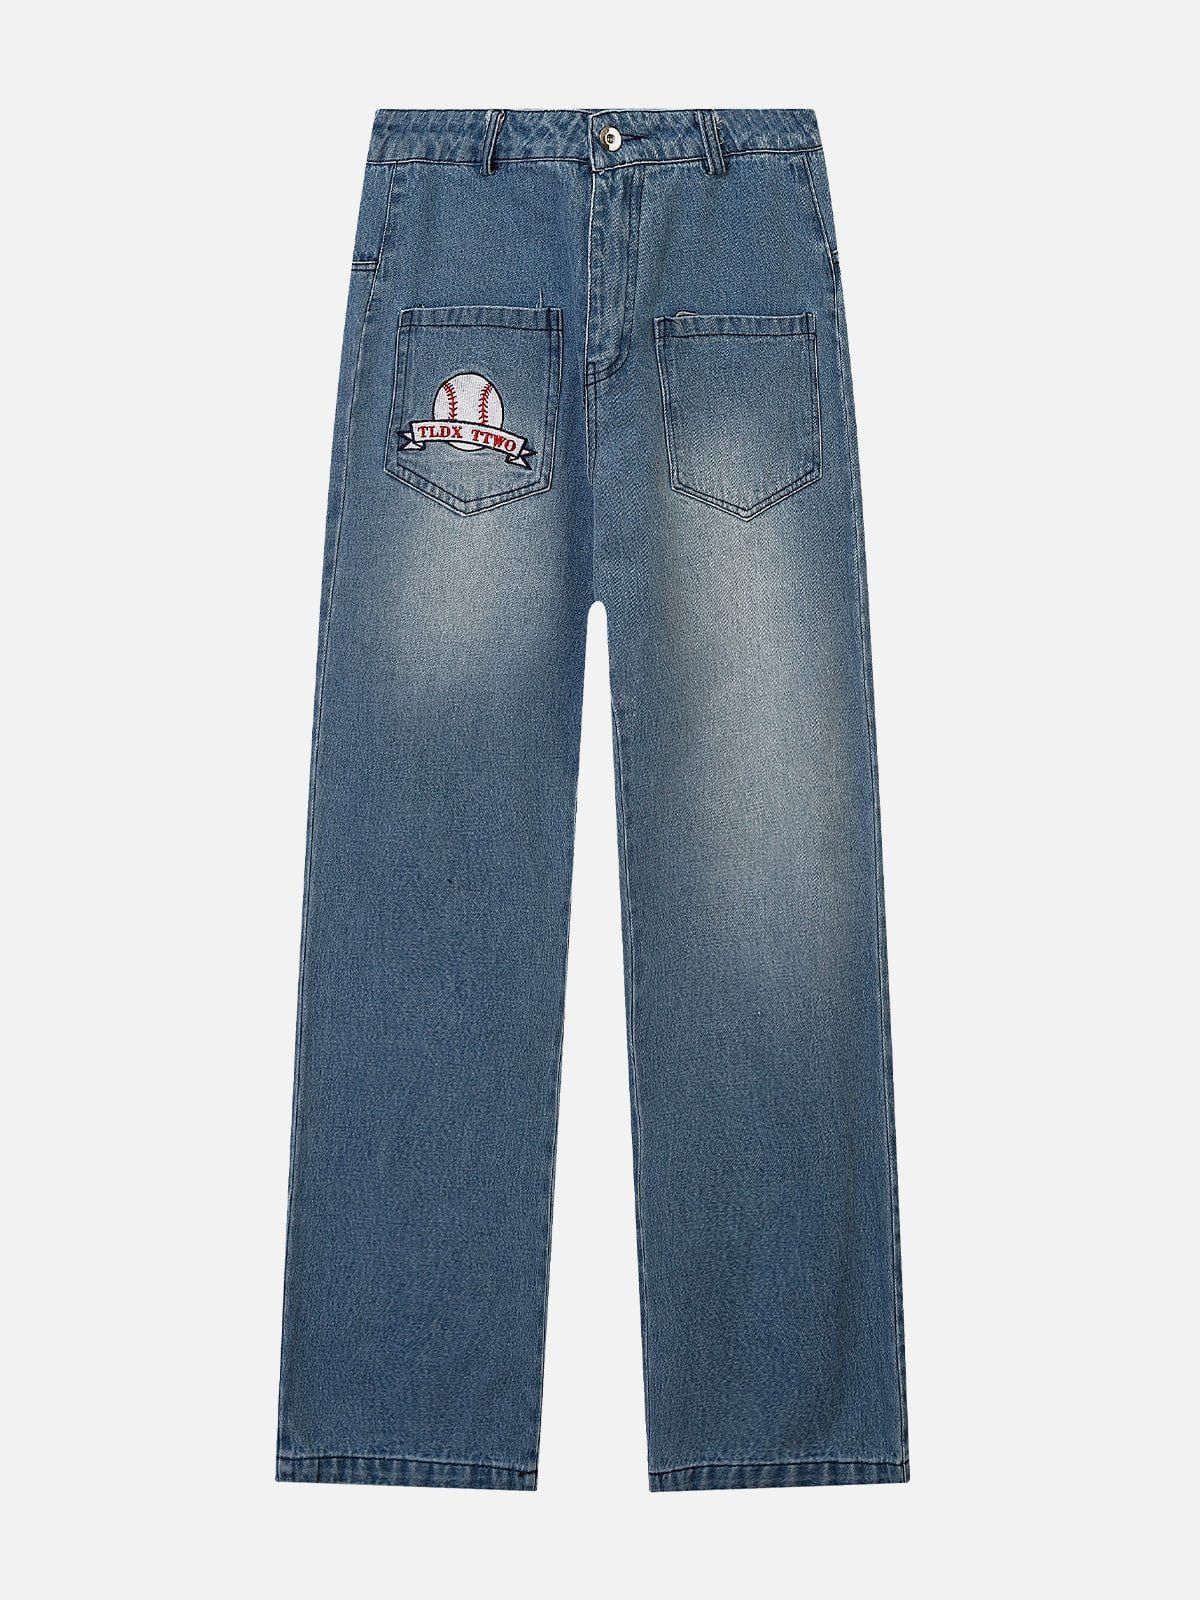 Eprezzy® - Flocked Letter Jeans Streetwear Fashion - eprezzy.com